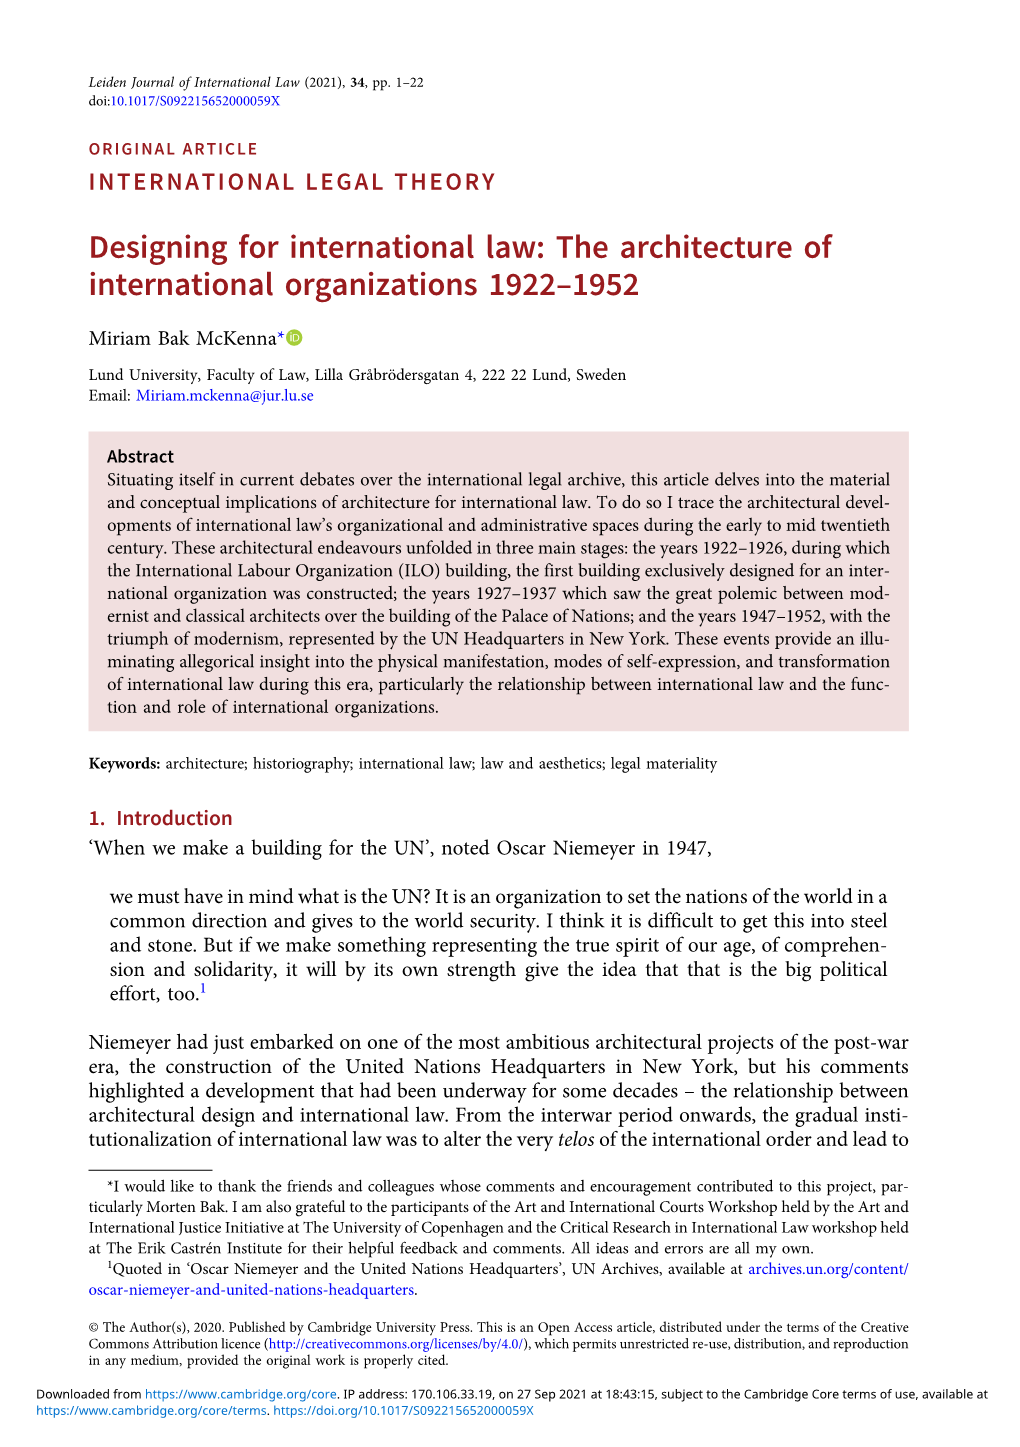 The Architecture of International Organizations 1922-•1952